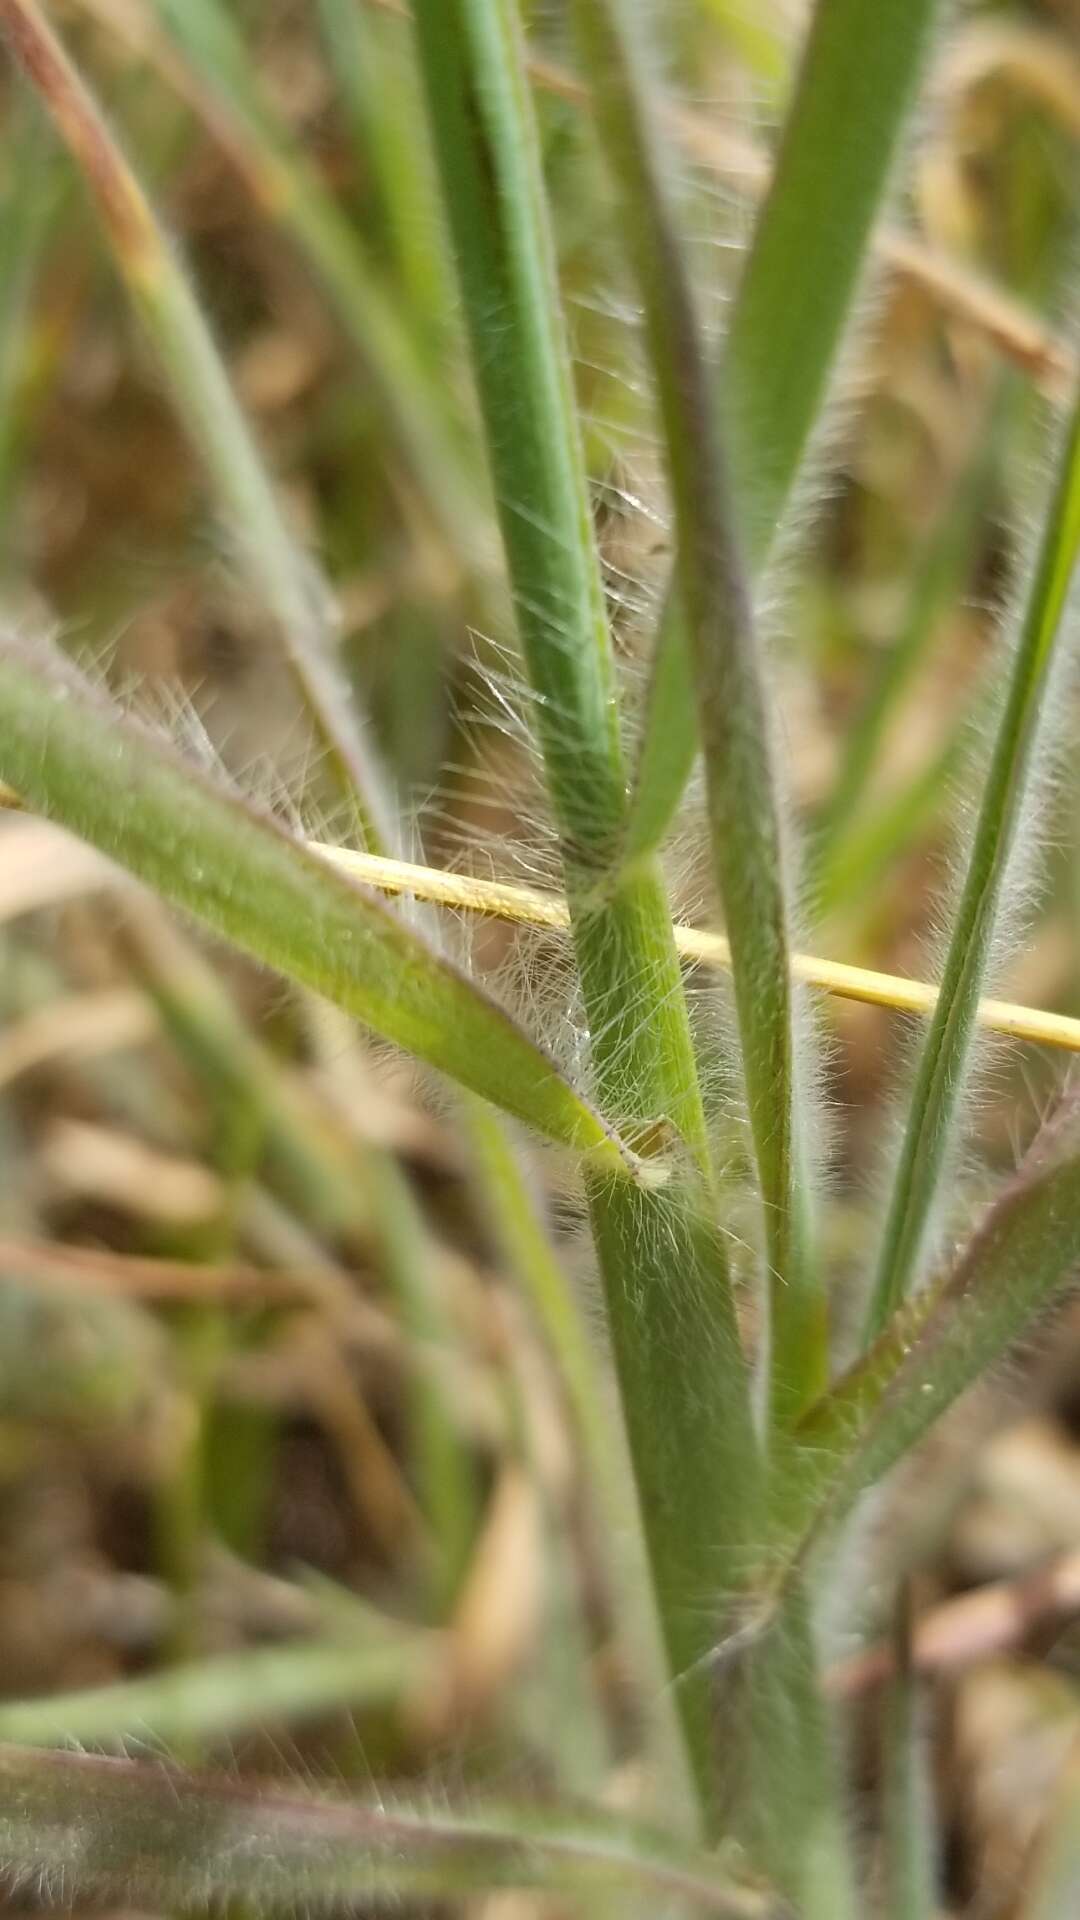 Image of Texas crabgrass